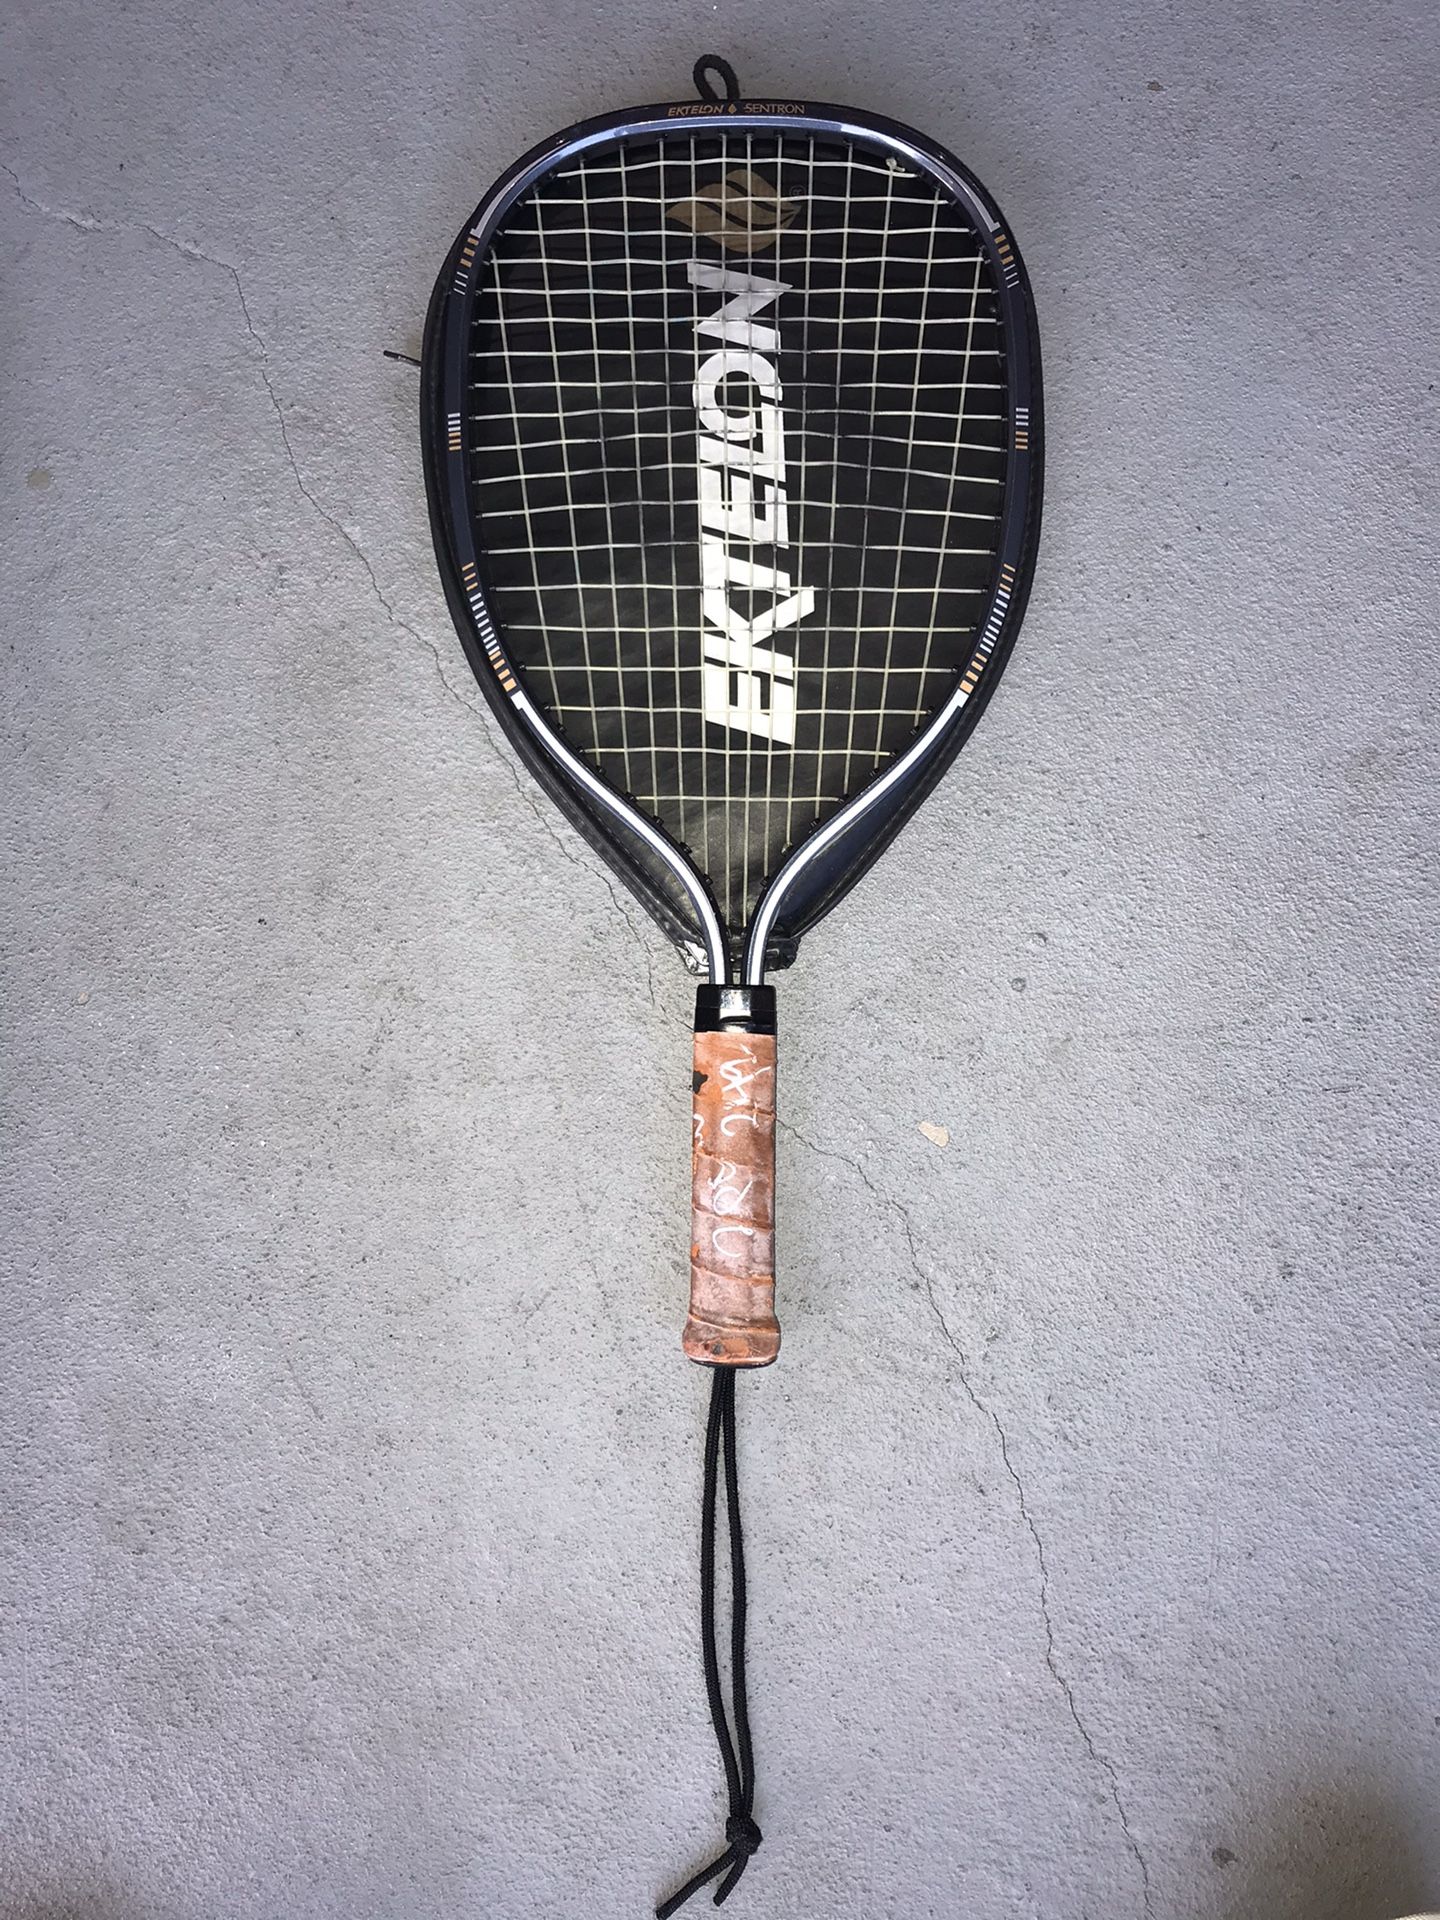 Ektelon Tennis Racket